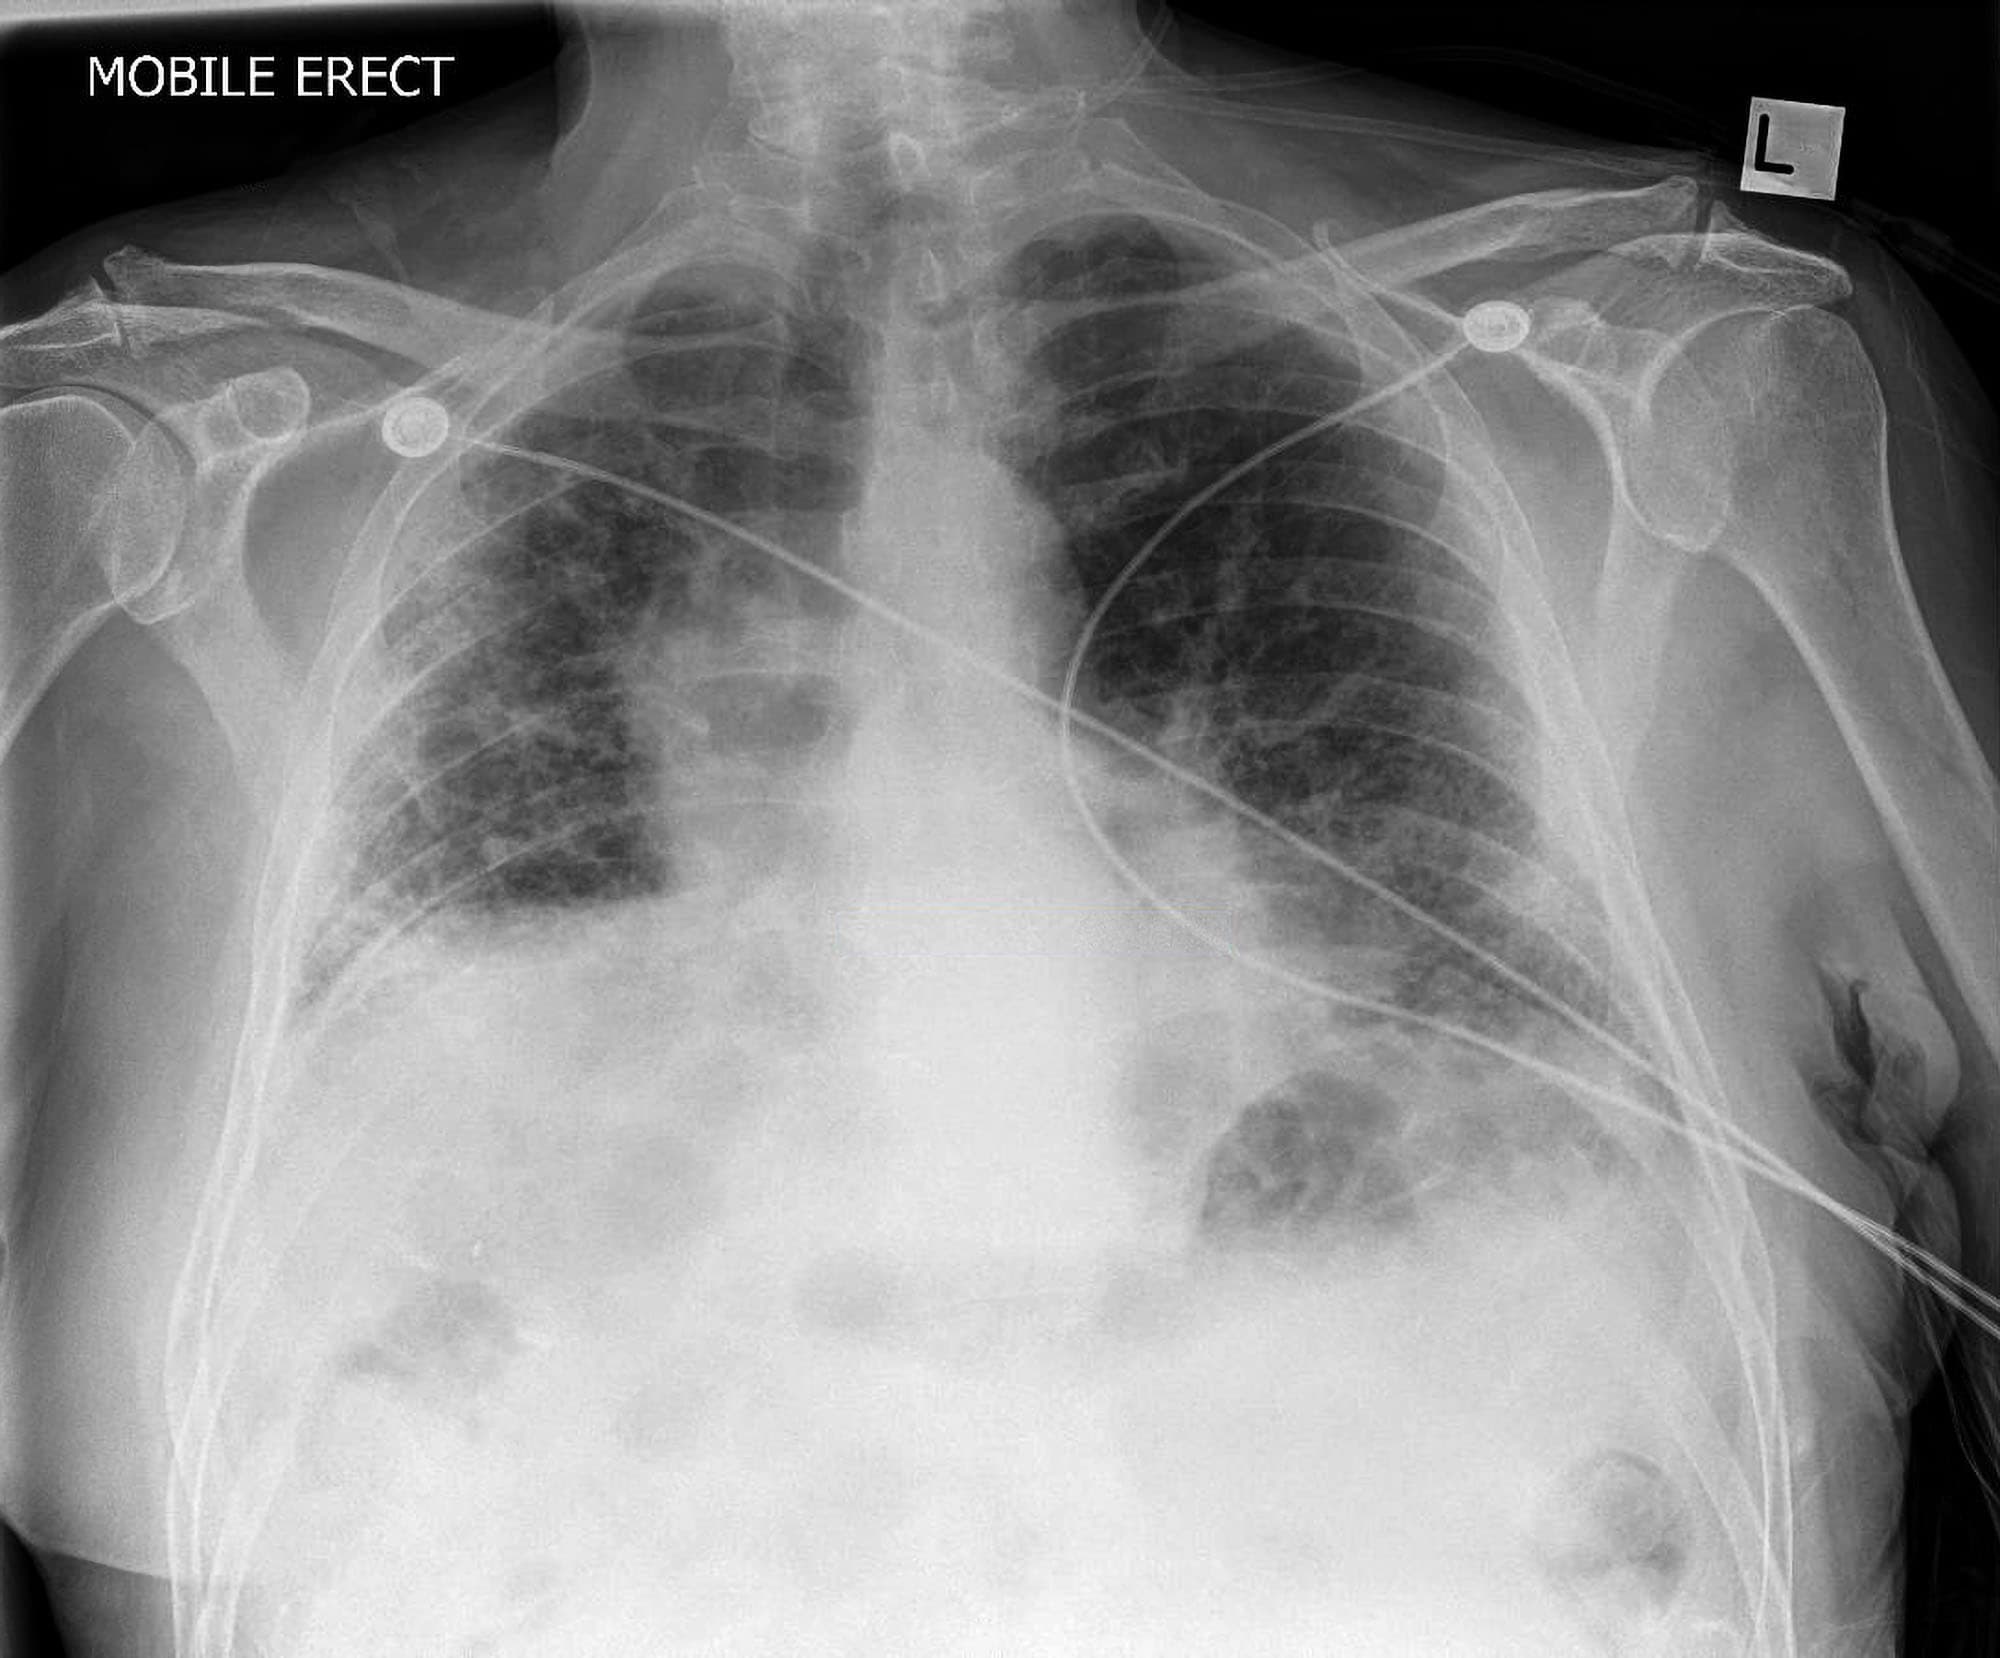 interstitial pneumonia x ray